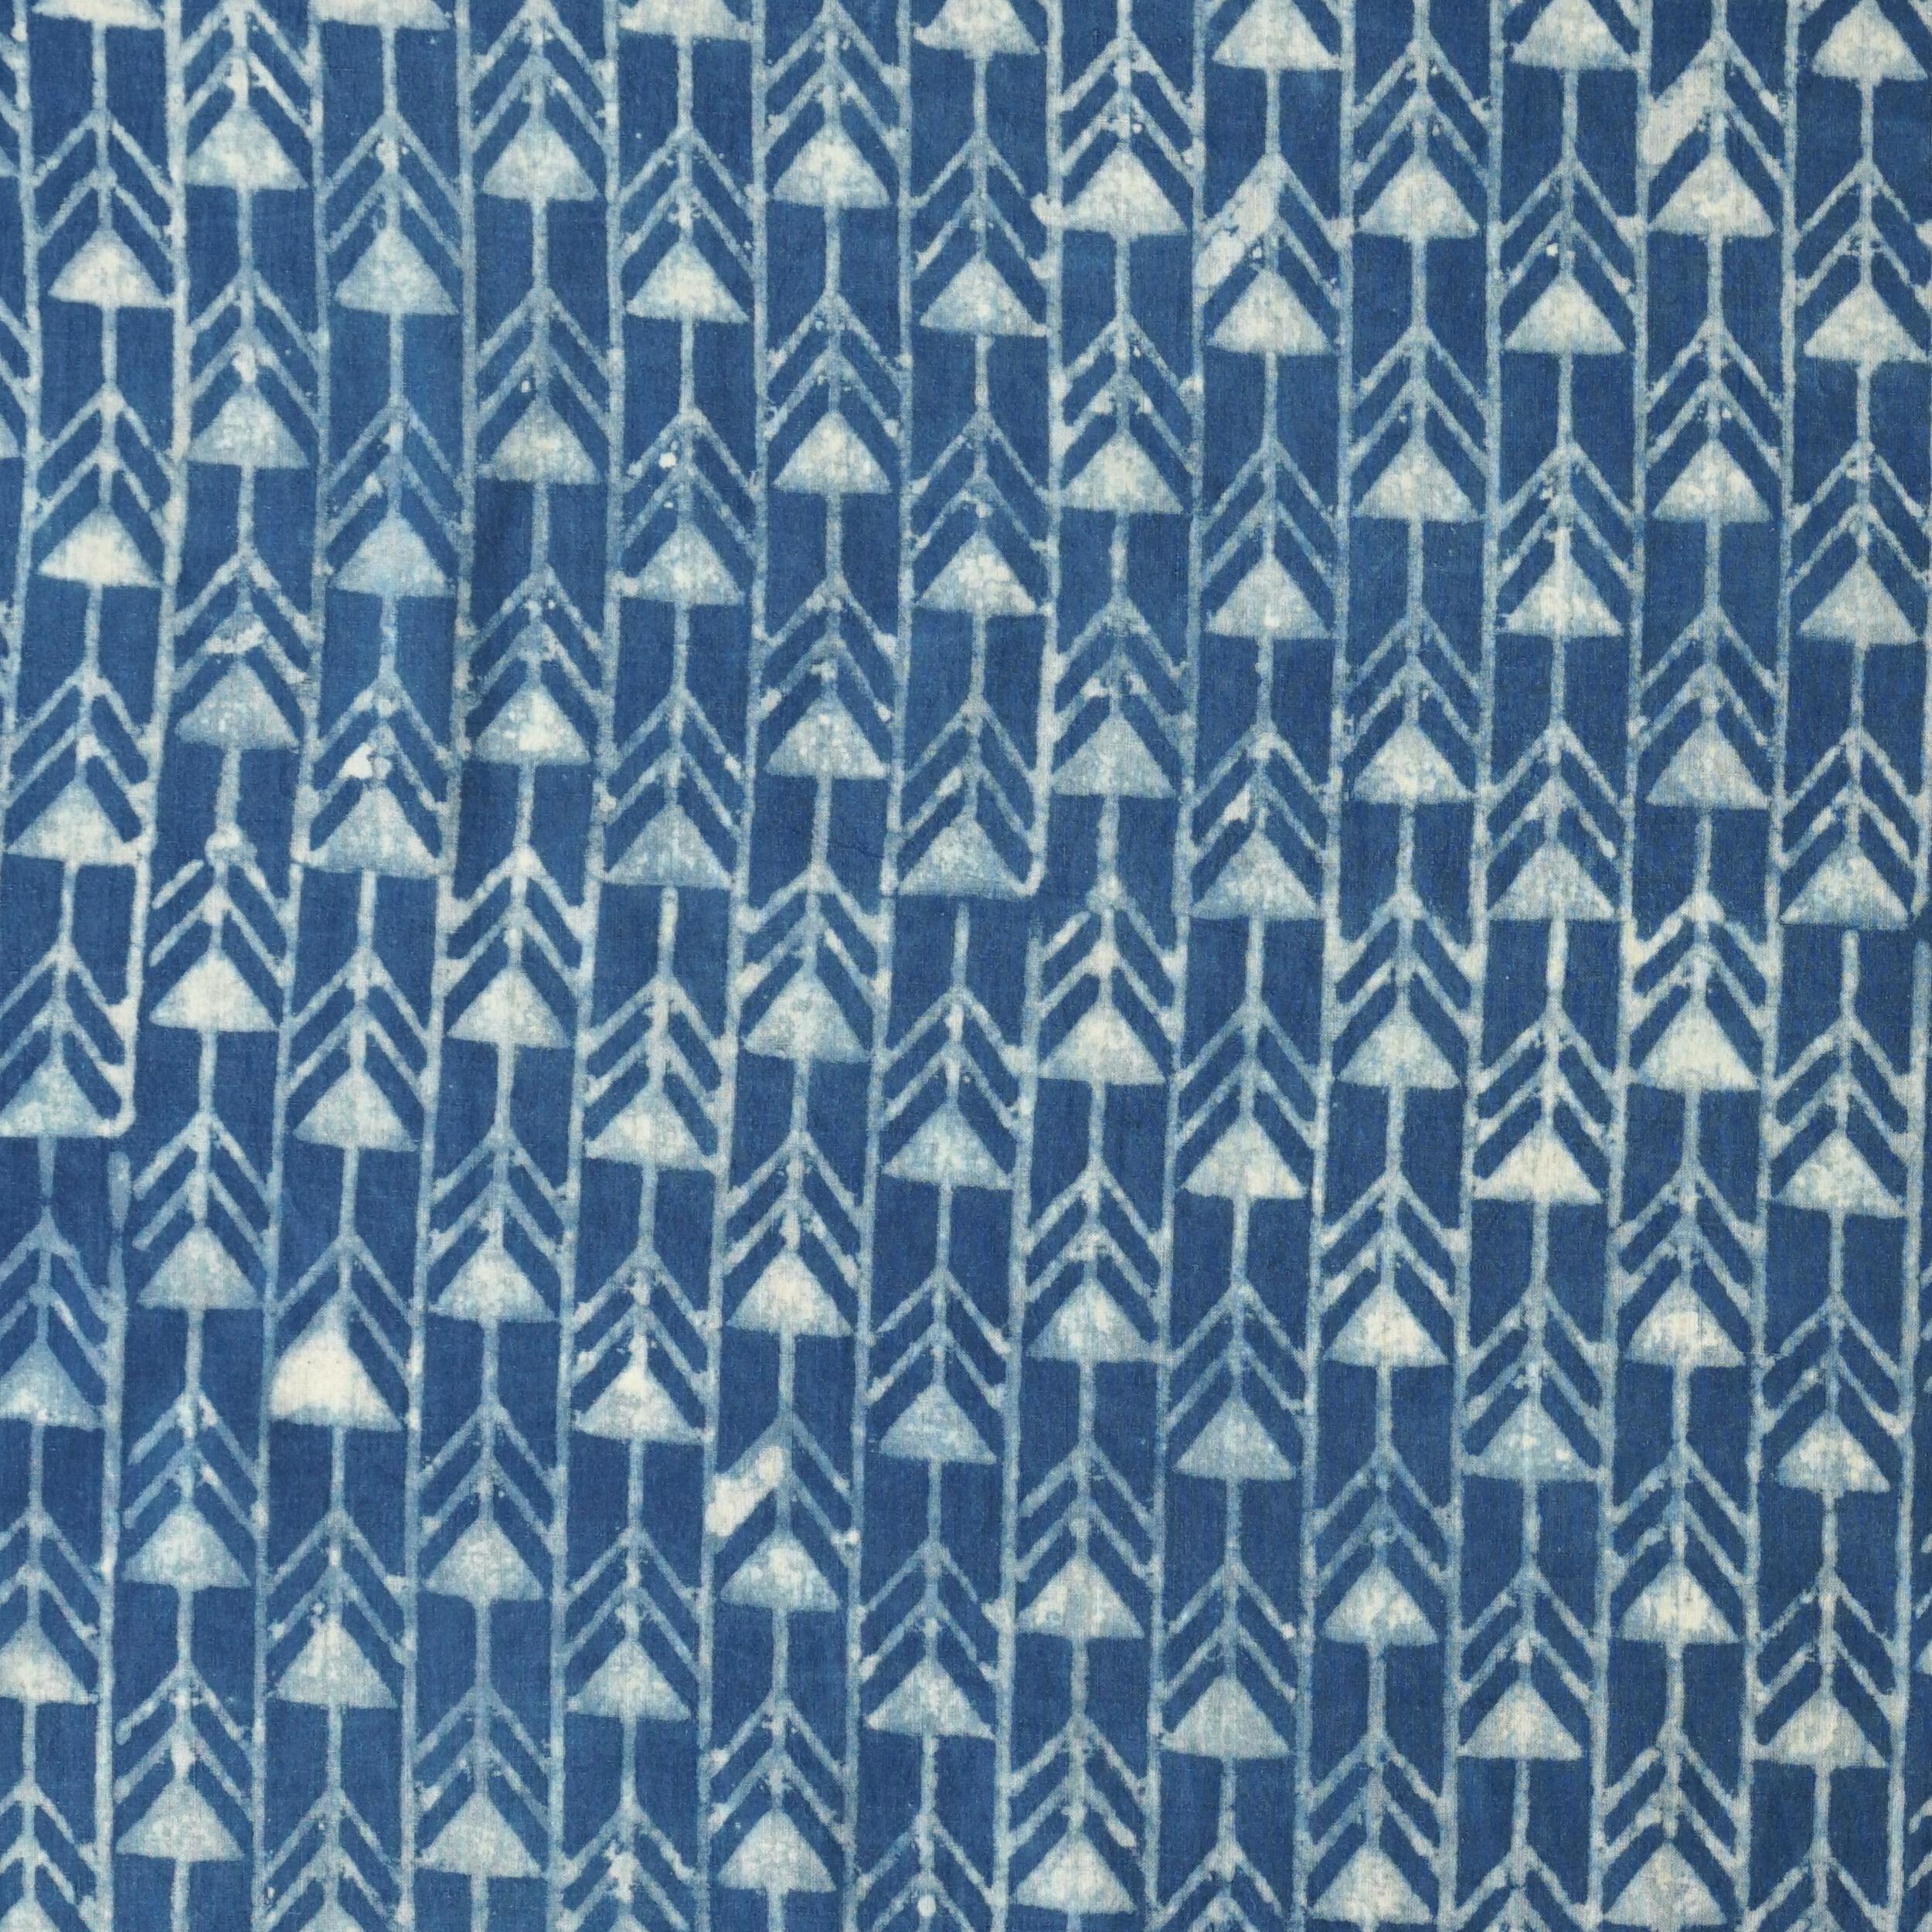 3 - AHM47 - Block-Printed Cotton Fabric From India - Arrows Motif - Indigo Dye - Flat